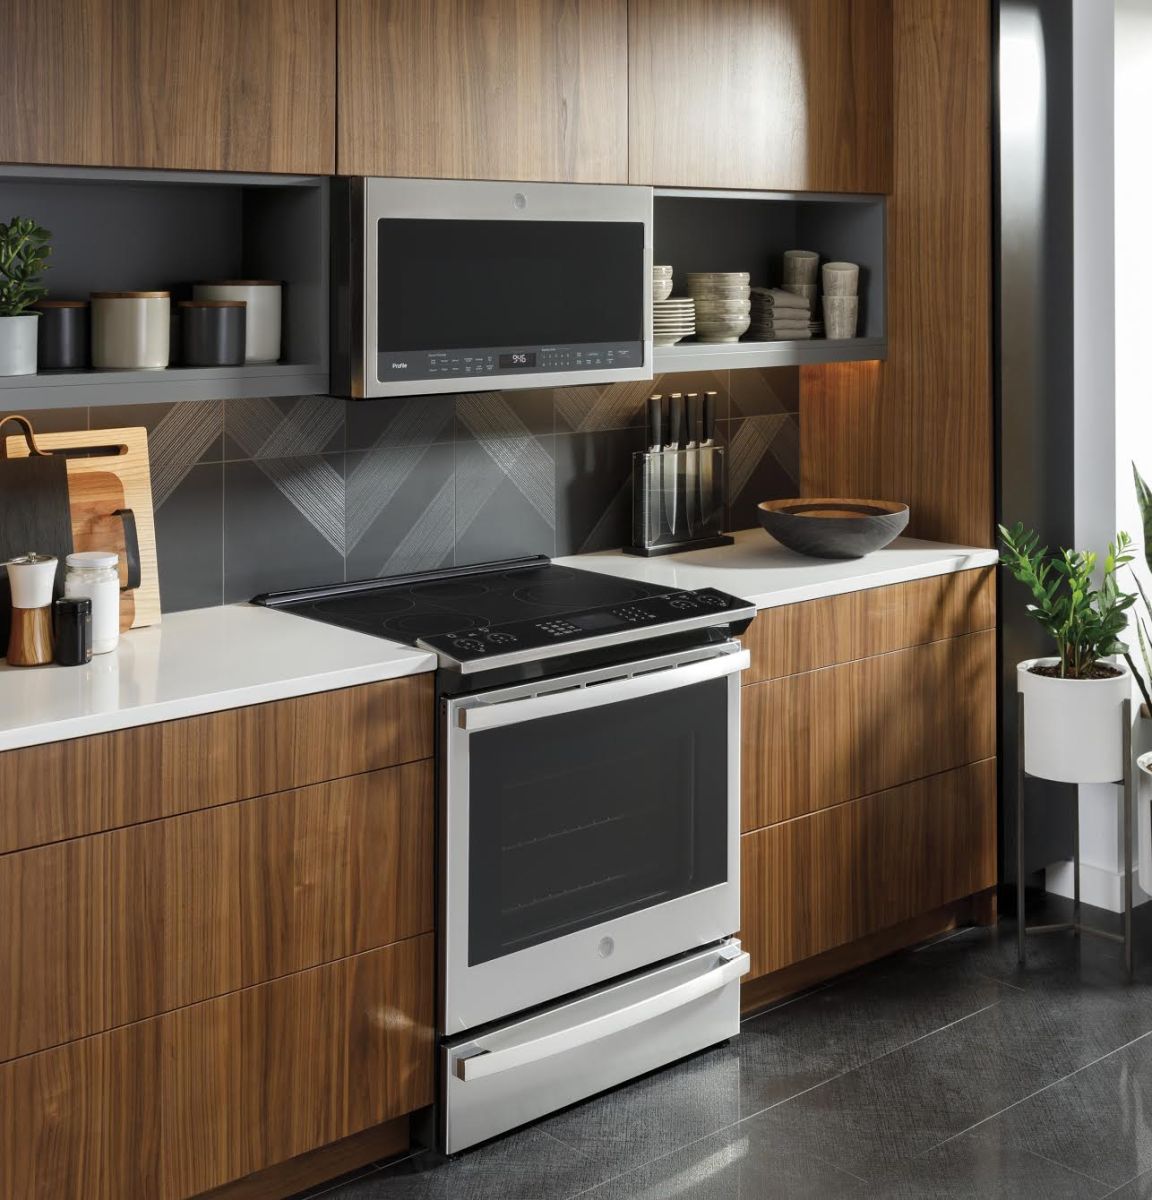 Kitchen with GE Profile smart range.